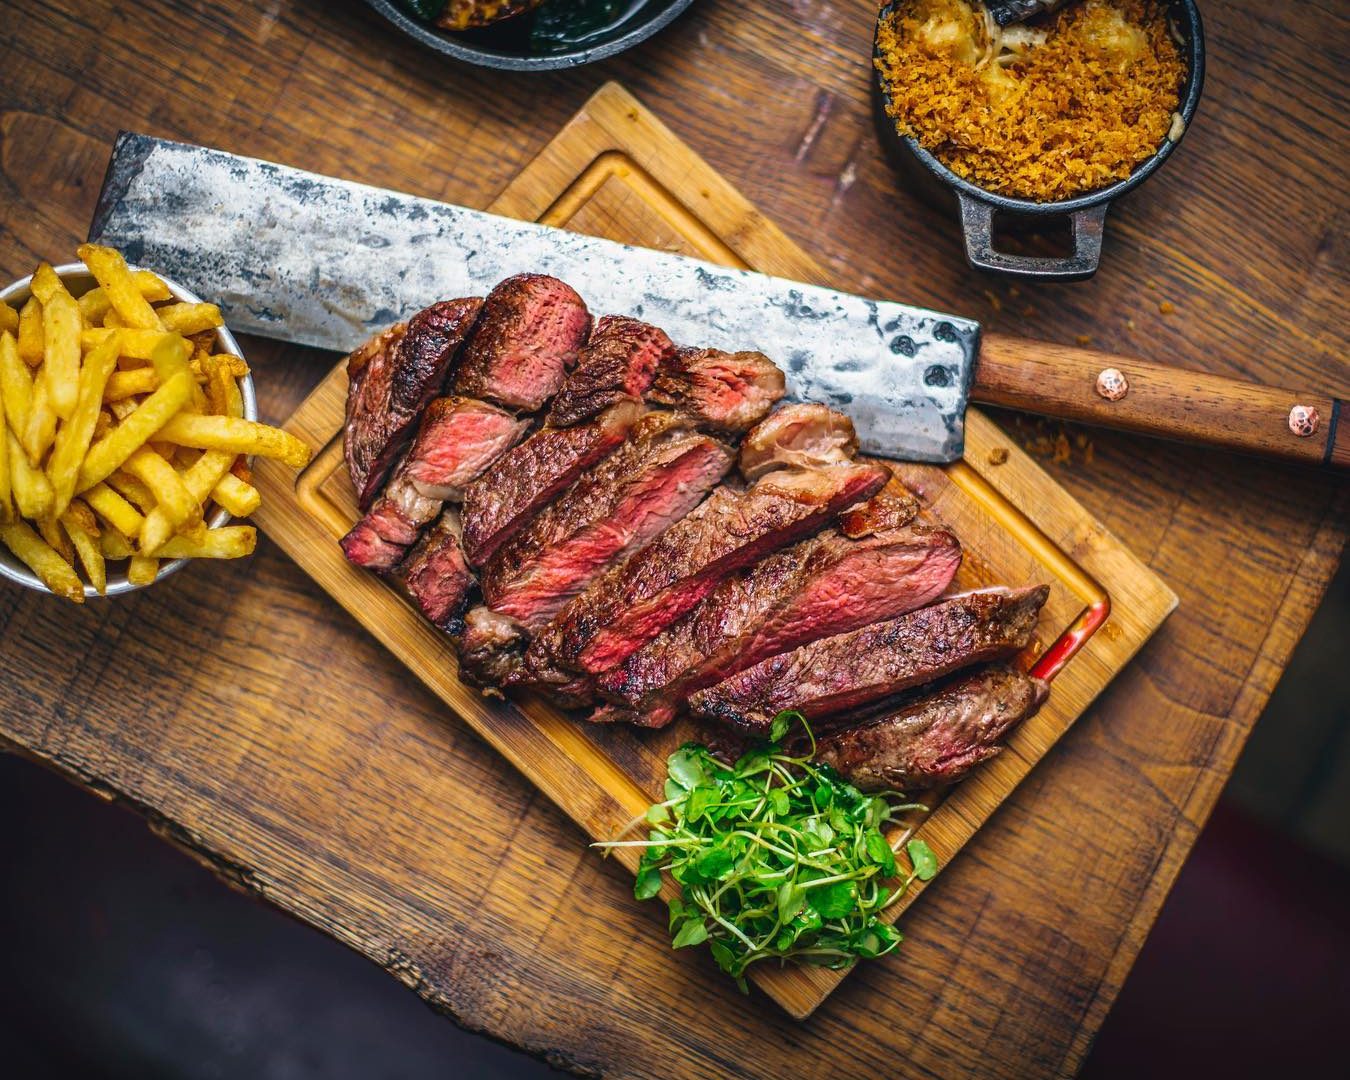 12 Of The Best Steak Restaurants In London That Don